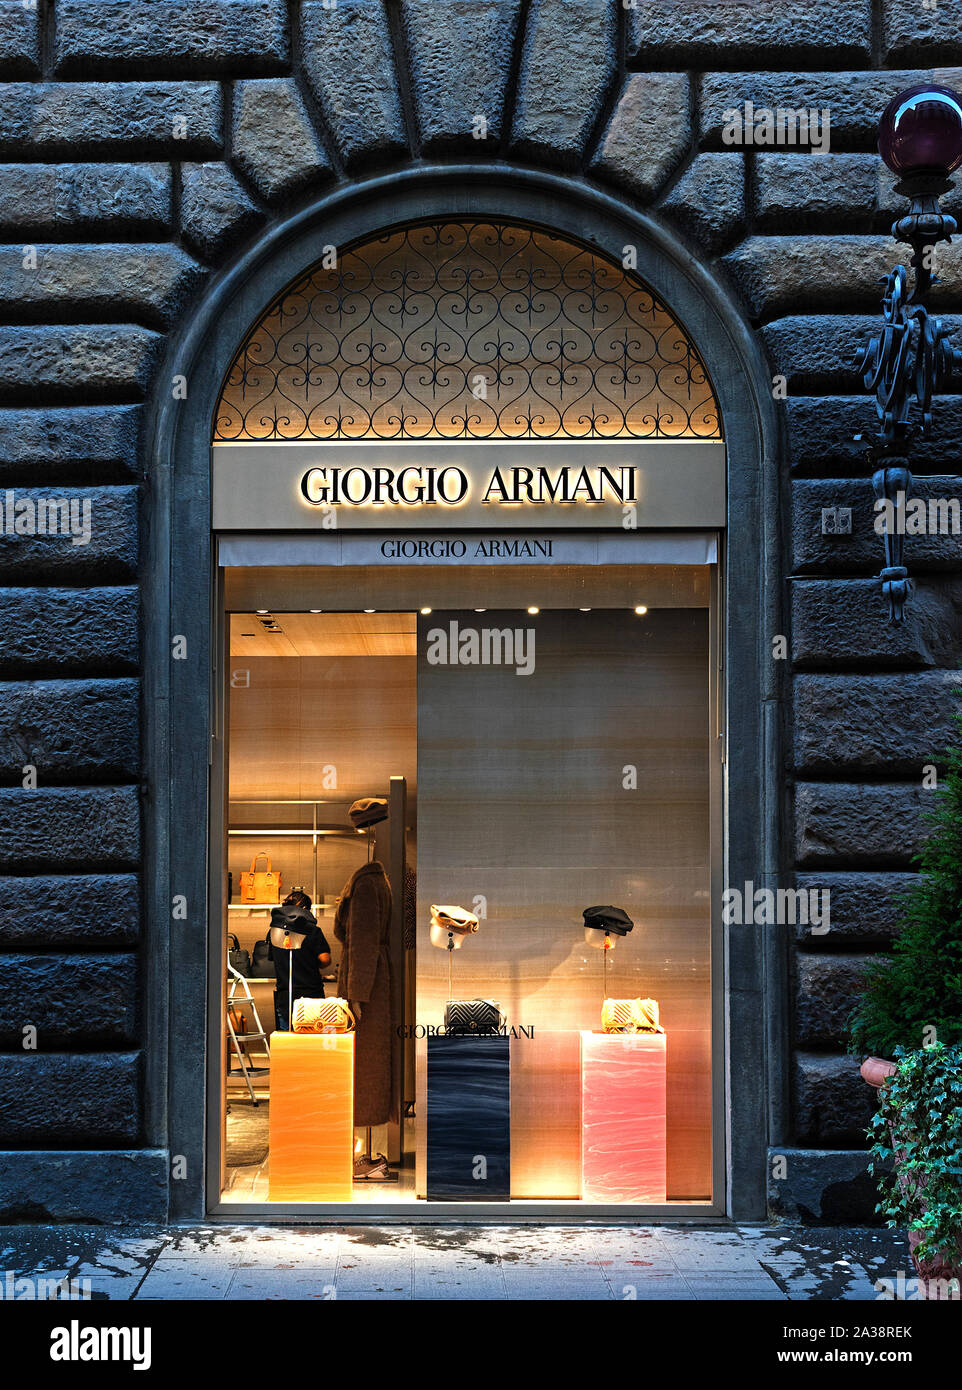 Giorgio Armani  Luxury clothing and accessories